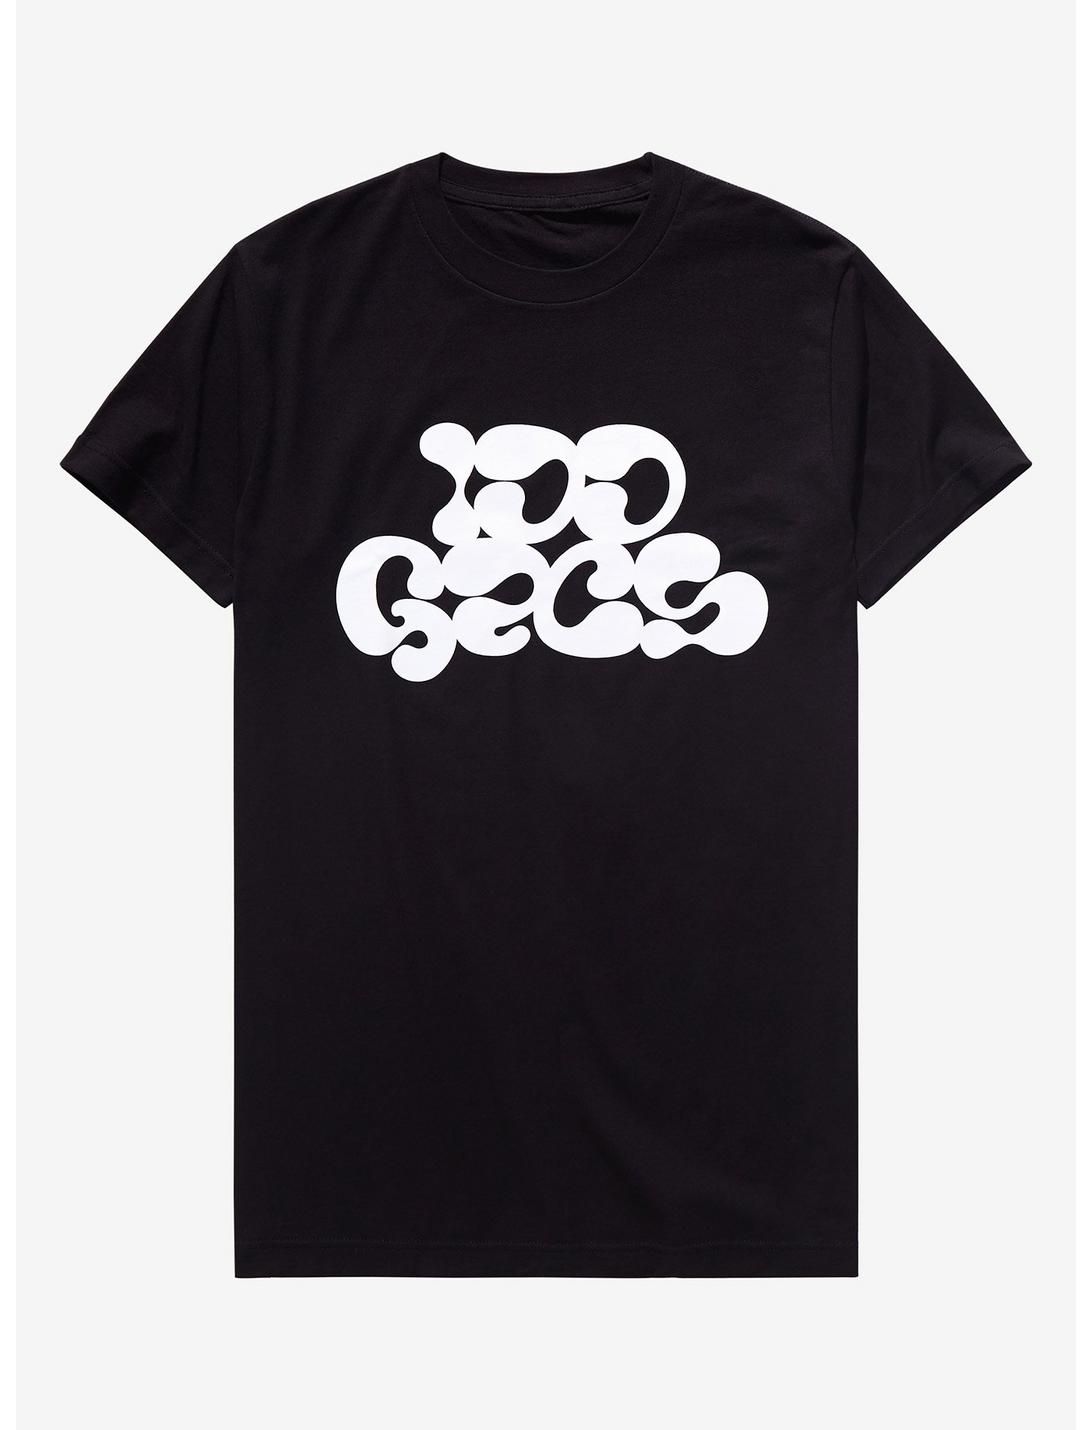 100 Gecs Logo T-Shirt | Hot Topic